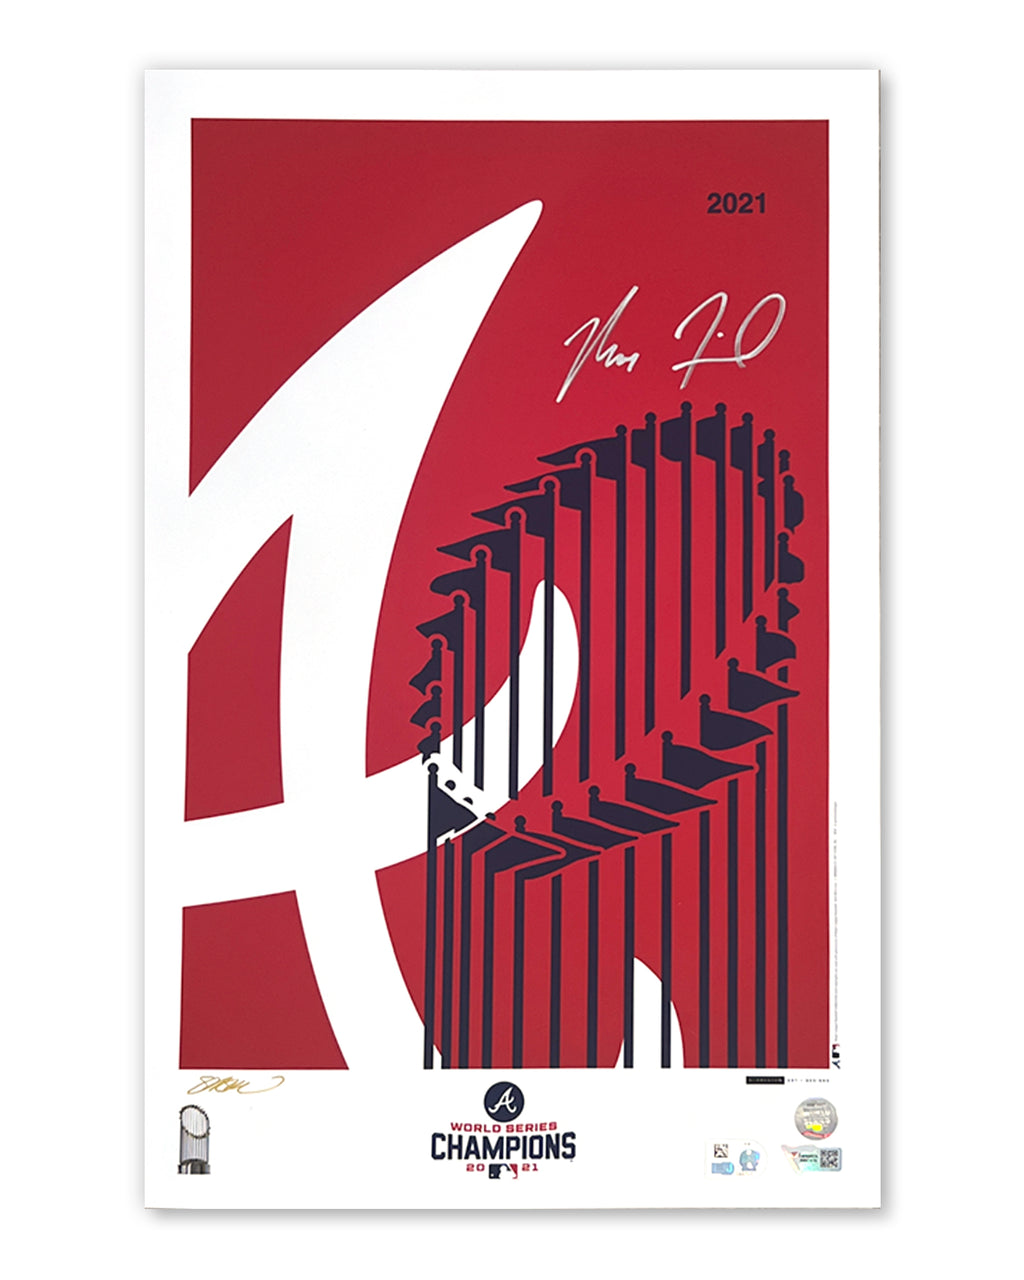 Minimalist World Series 2021 Poster Print - Max Fried Signed - MLB